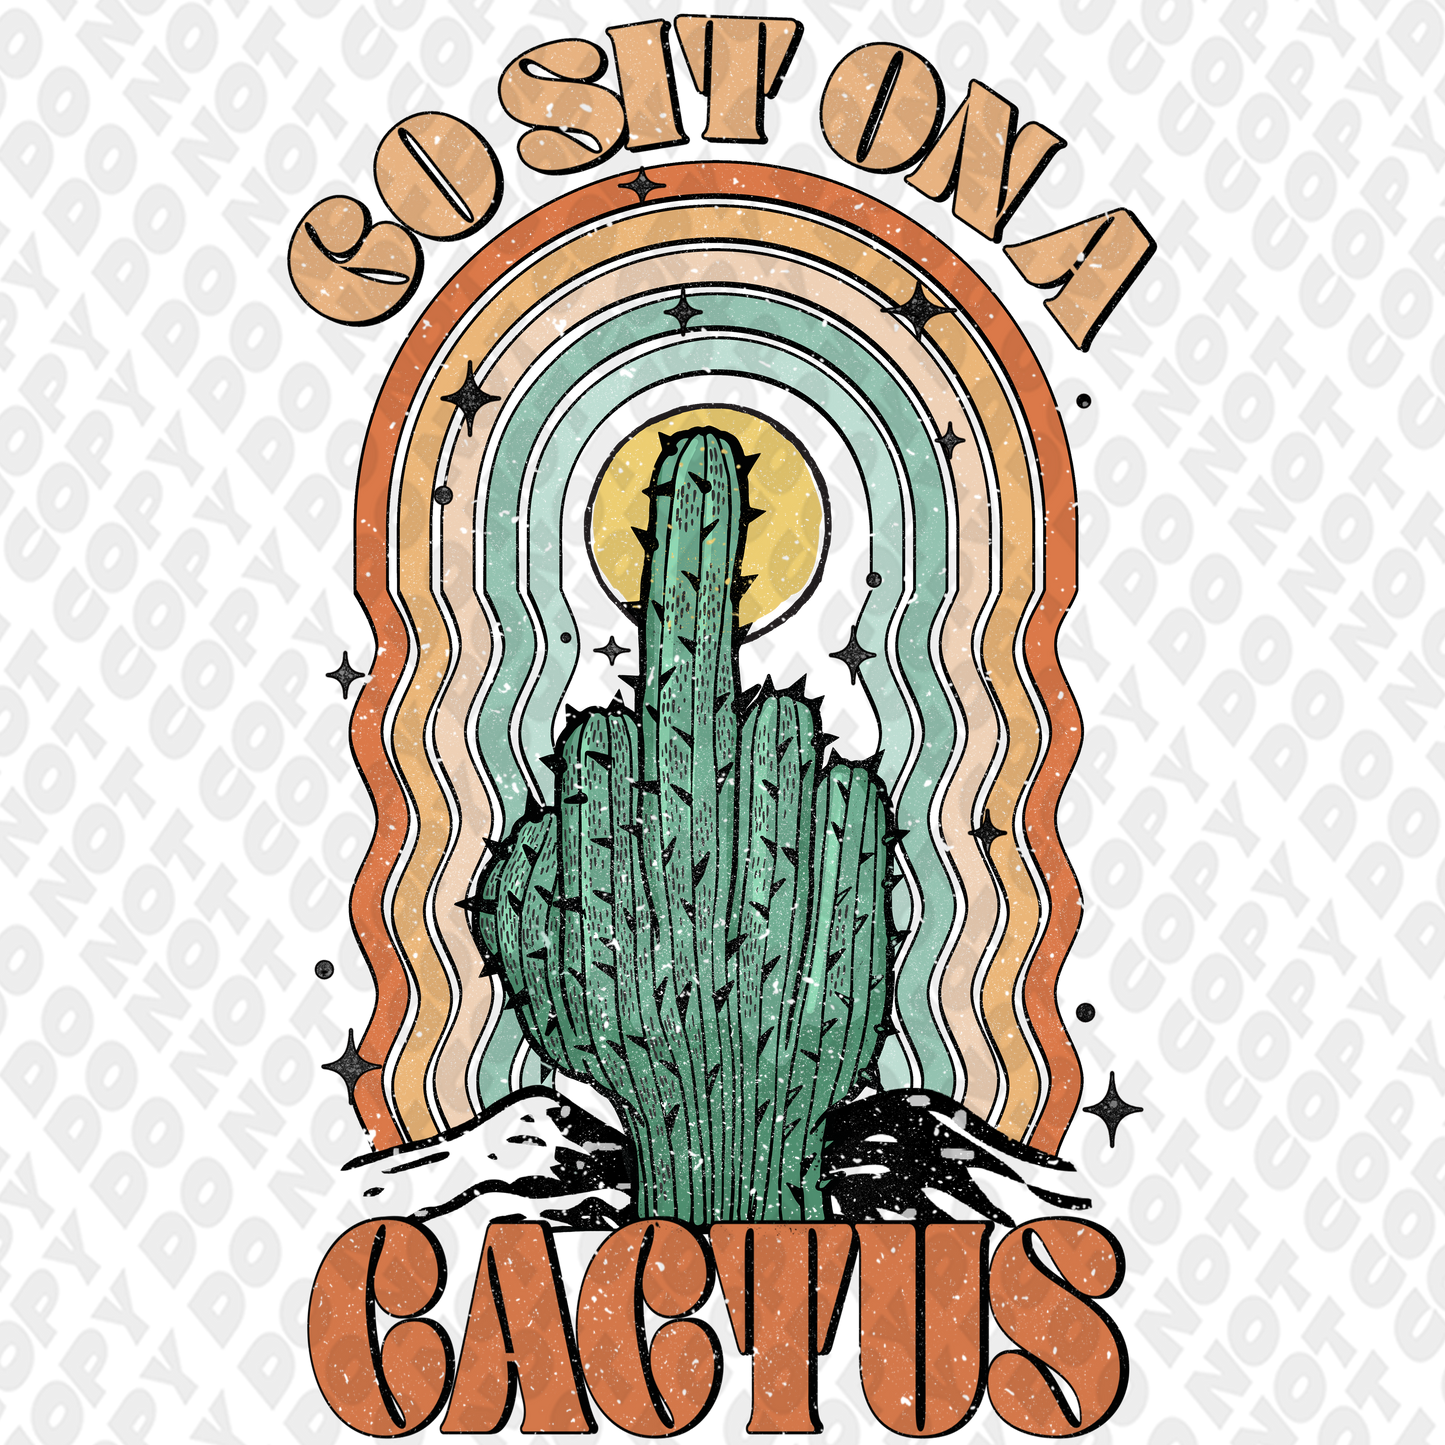 Sit on cactus